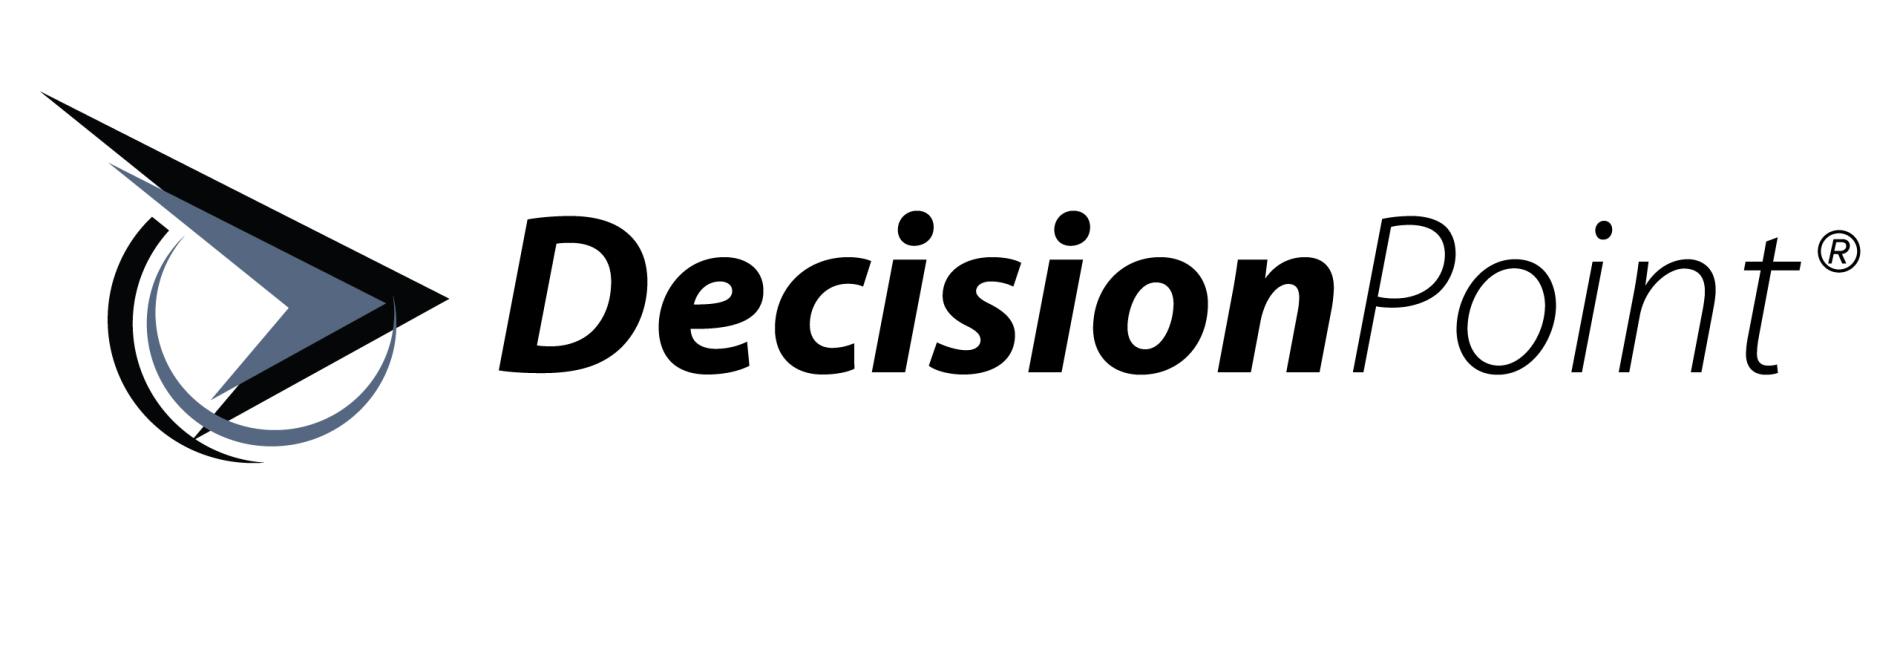 DecisionPointR logo - banner